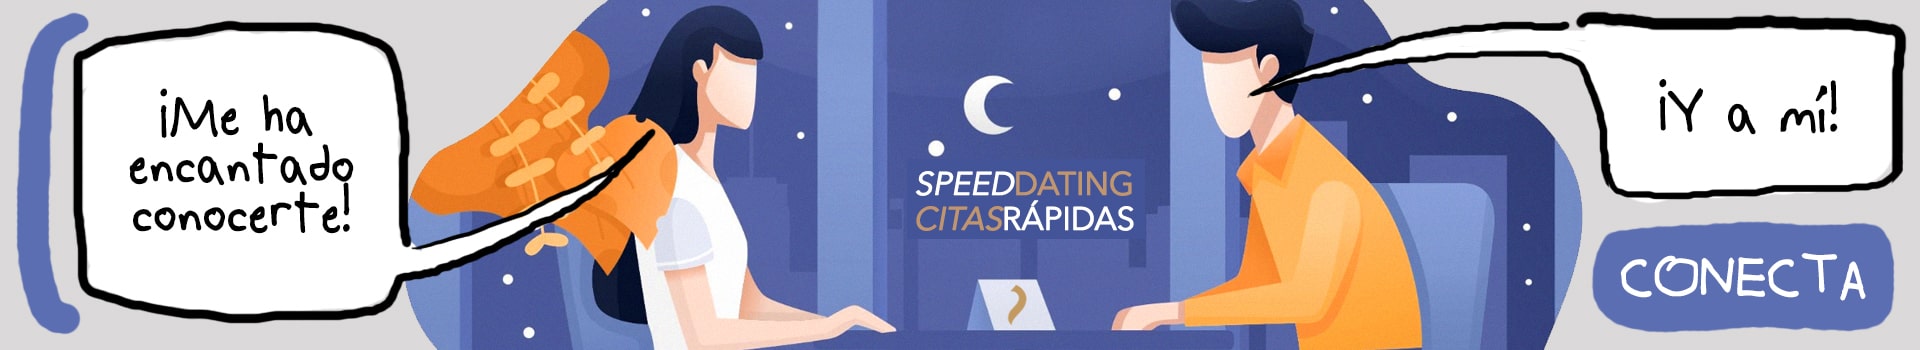 Speed dating Barcelona